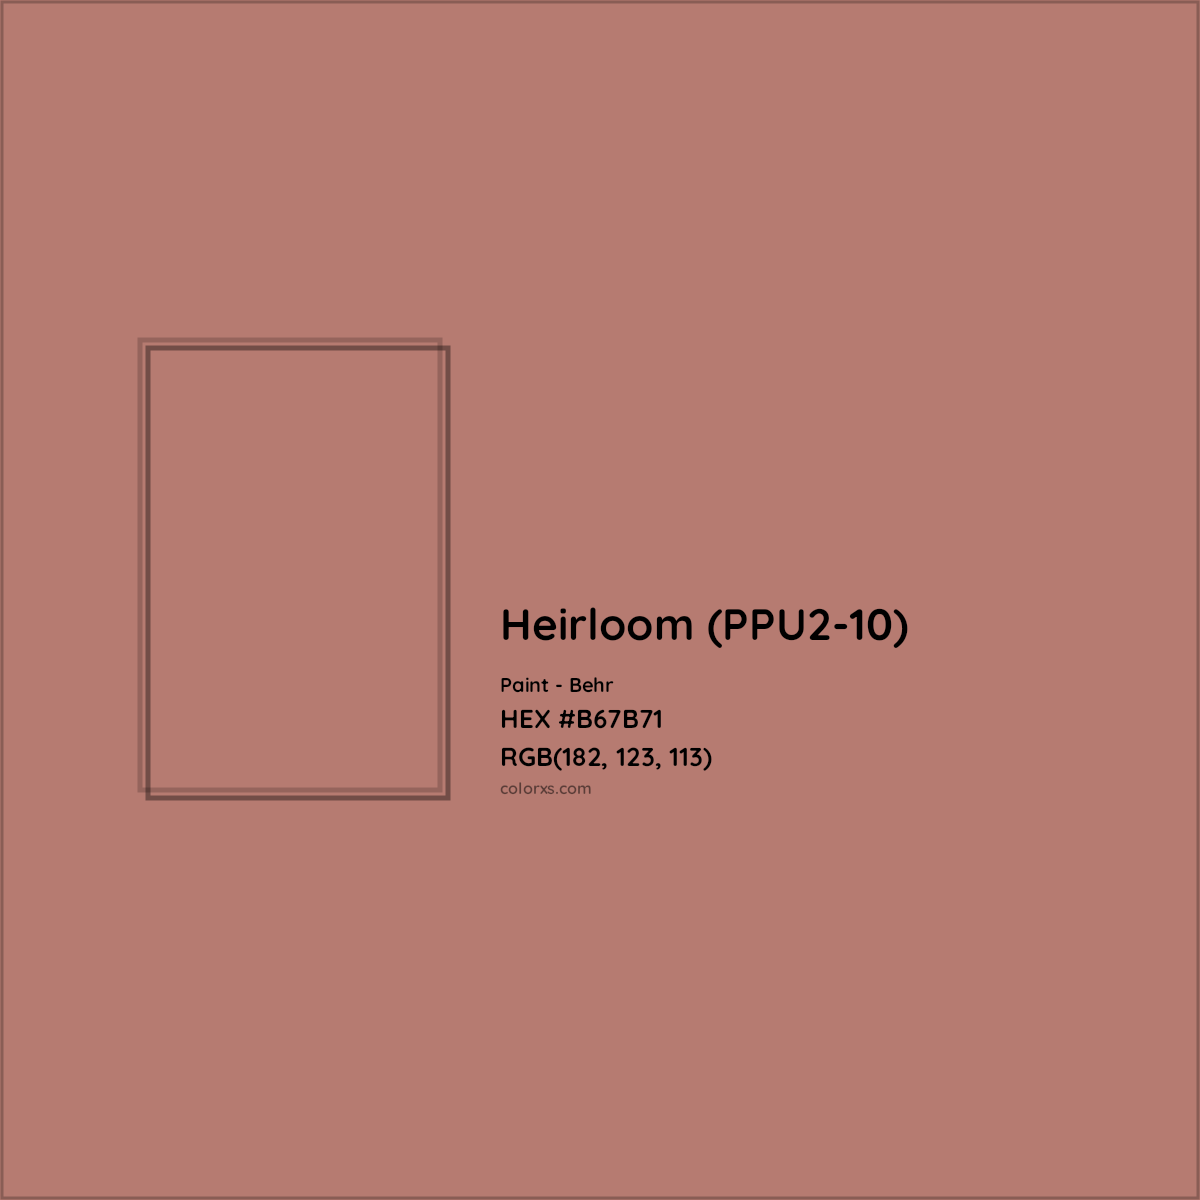 HEX #B67B71 Heirloom (PPU2-10) Paint Behr - Color Code